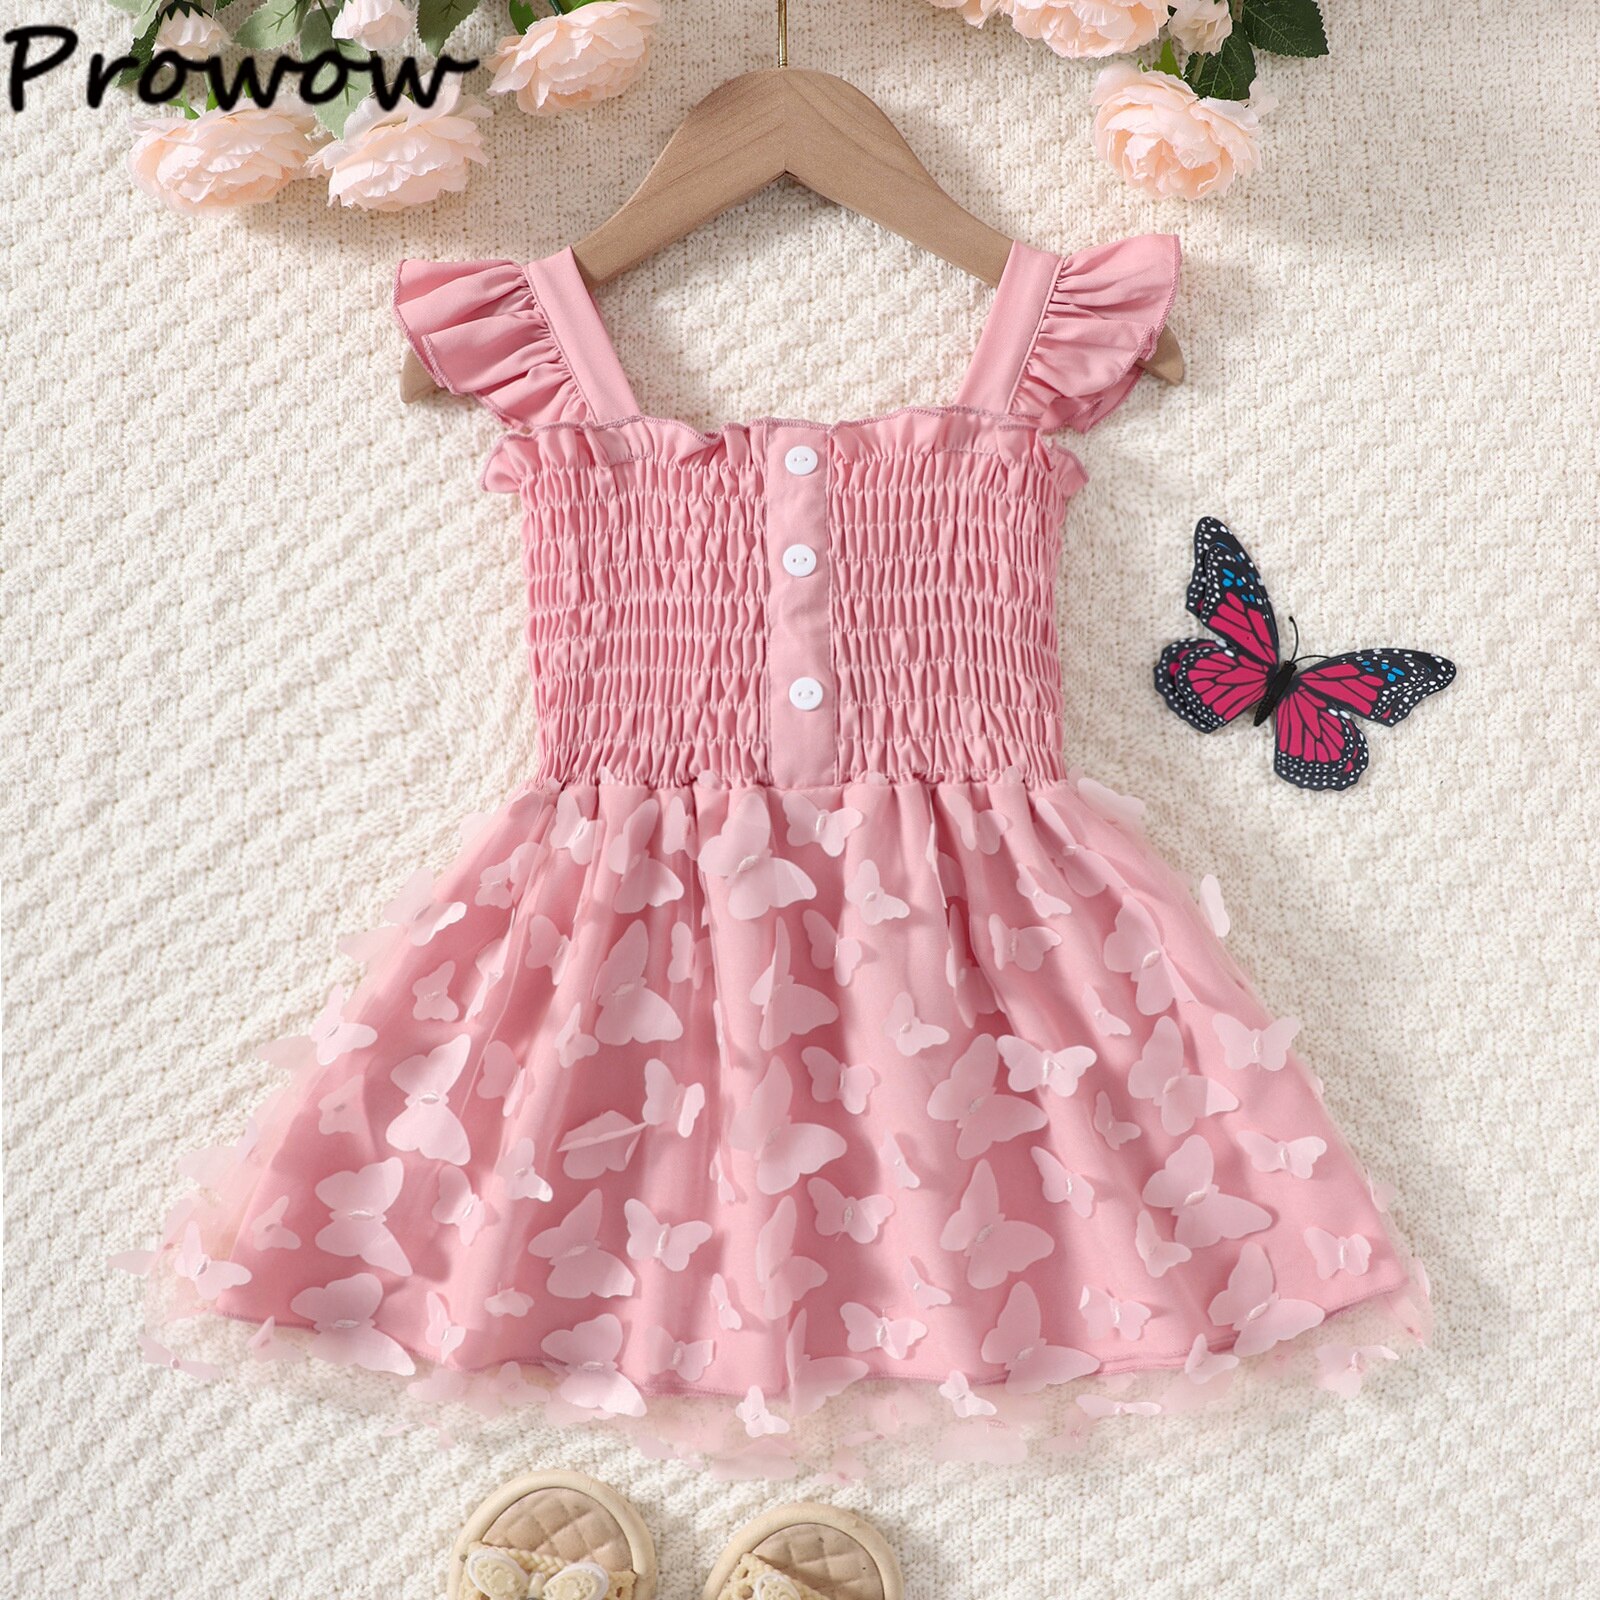 Prowow-1-5Y-Girl-Birthday-Dresses-Summer-Sleeveless-Spaghetti-Peplum-Butterfly-Child-Dress-For-Girls-Baby-1